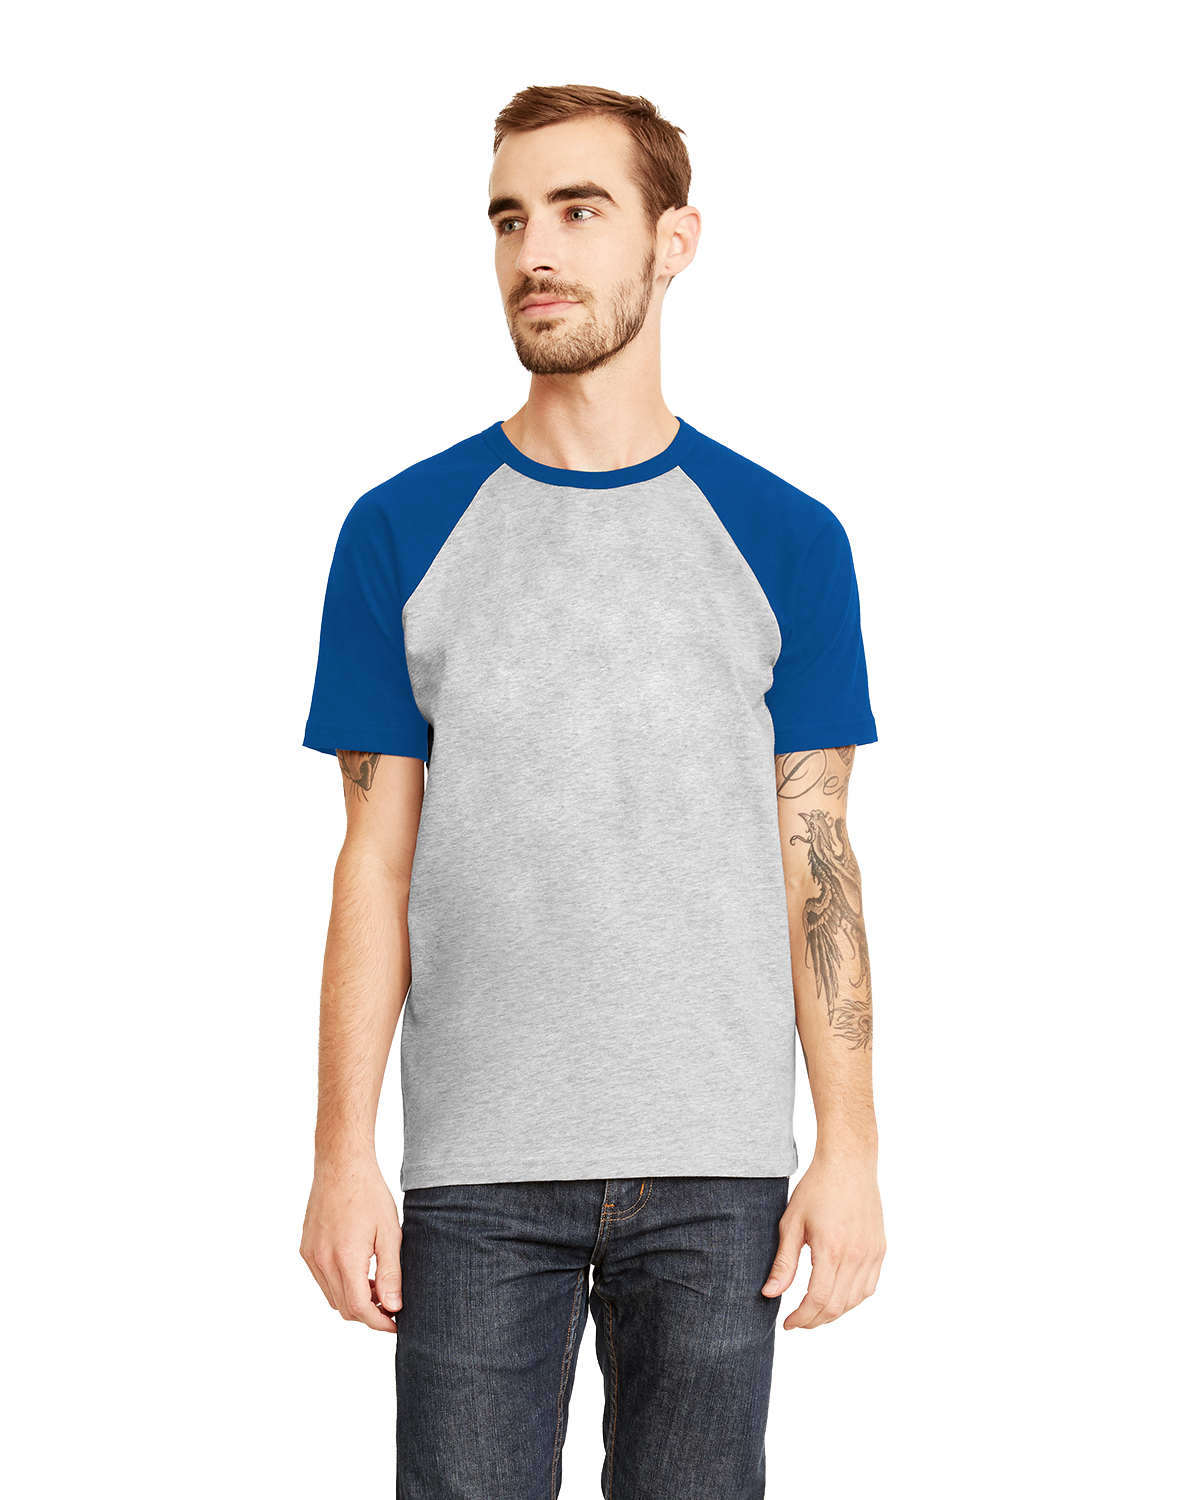 T-Shirts - Next Level N3650 Unisex Raglan Short-Sleeve T-Shirt